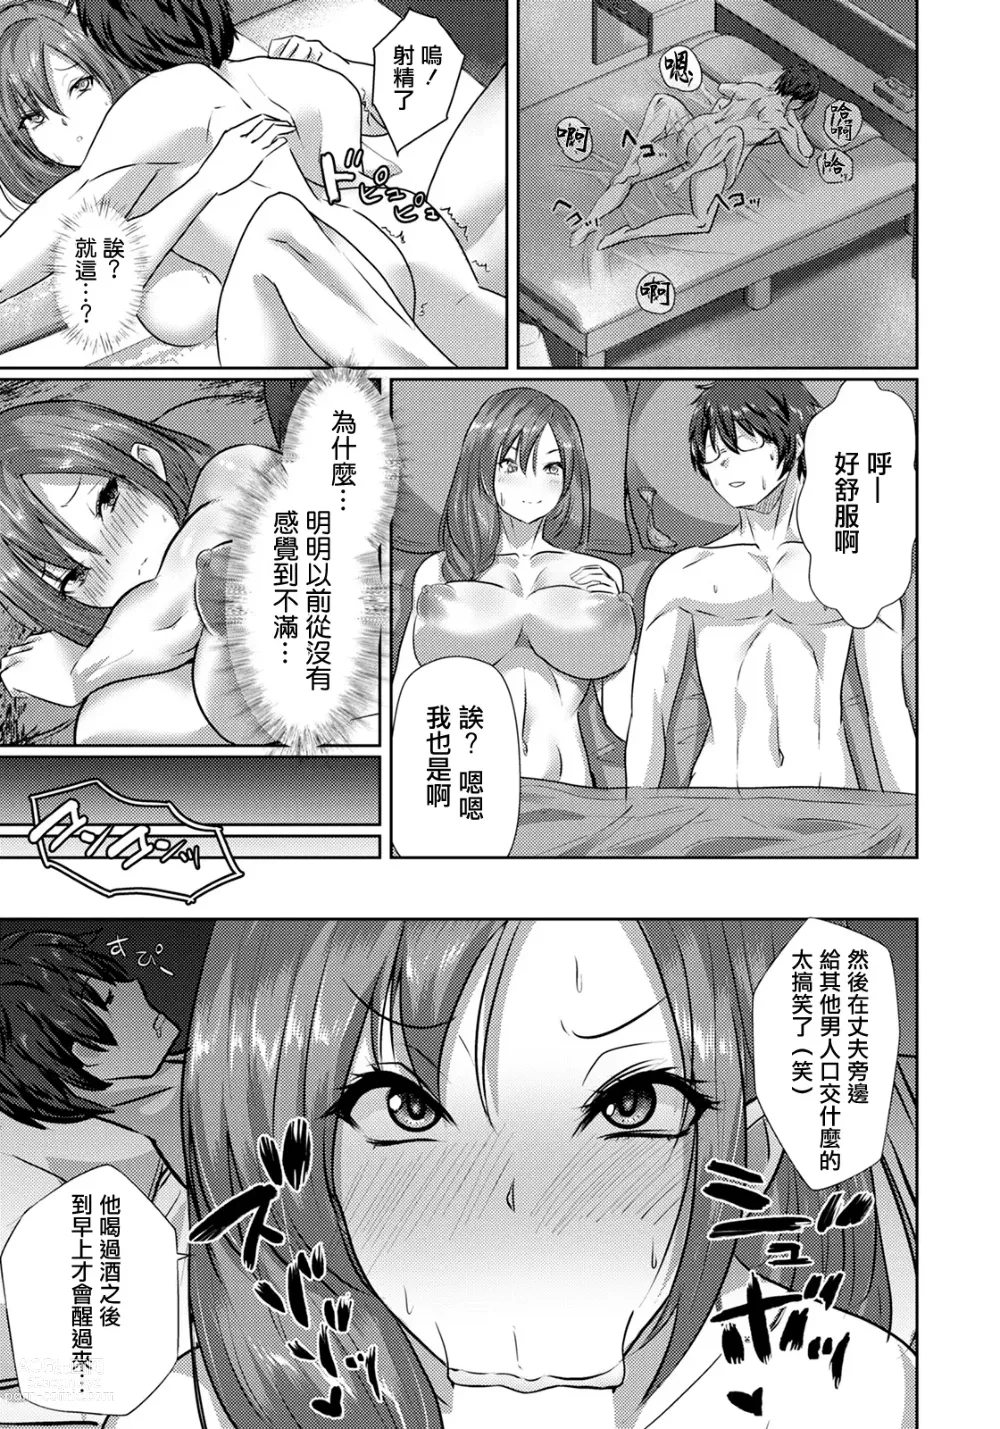 Page 16 of manga NTR婚后蜜月